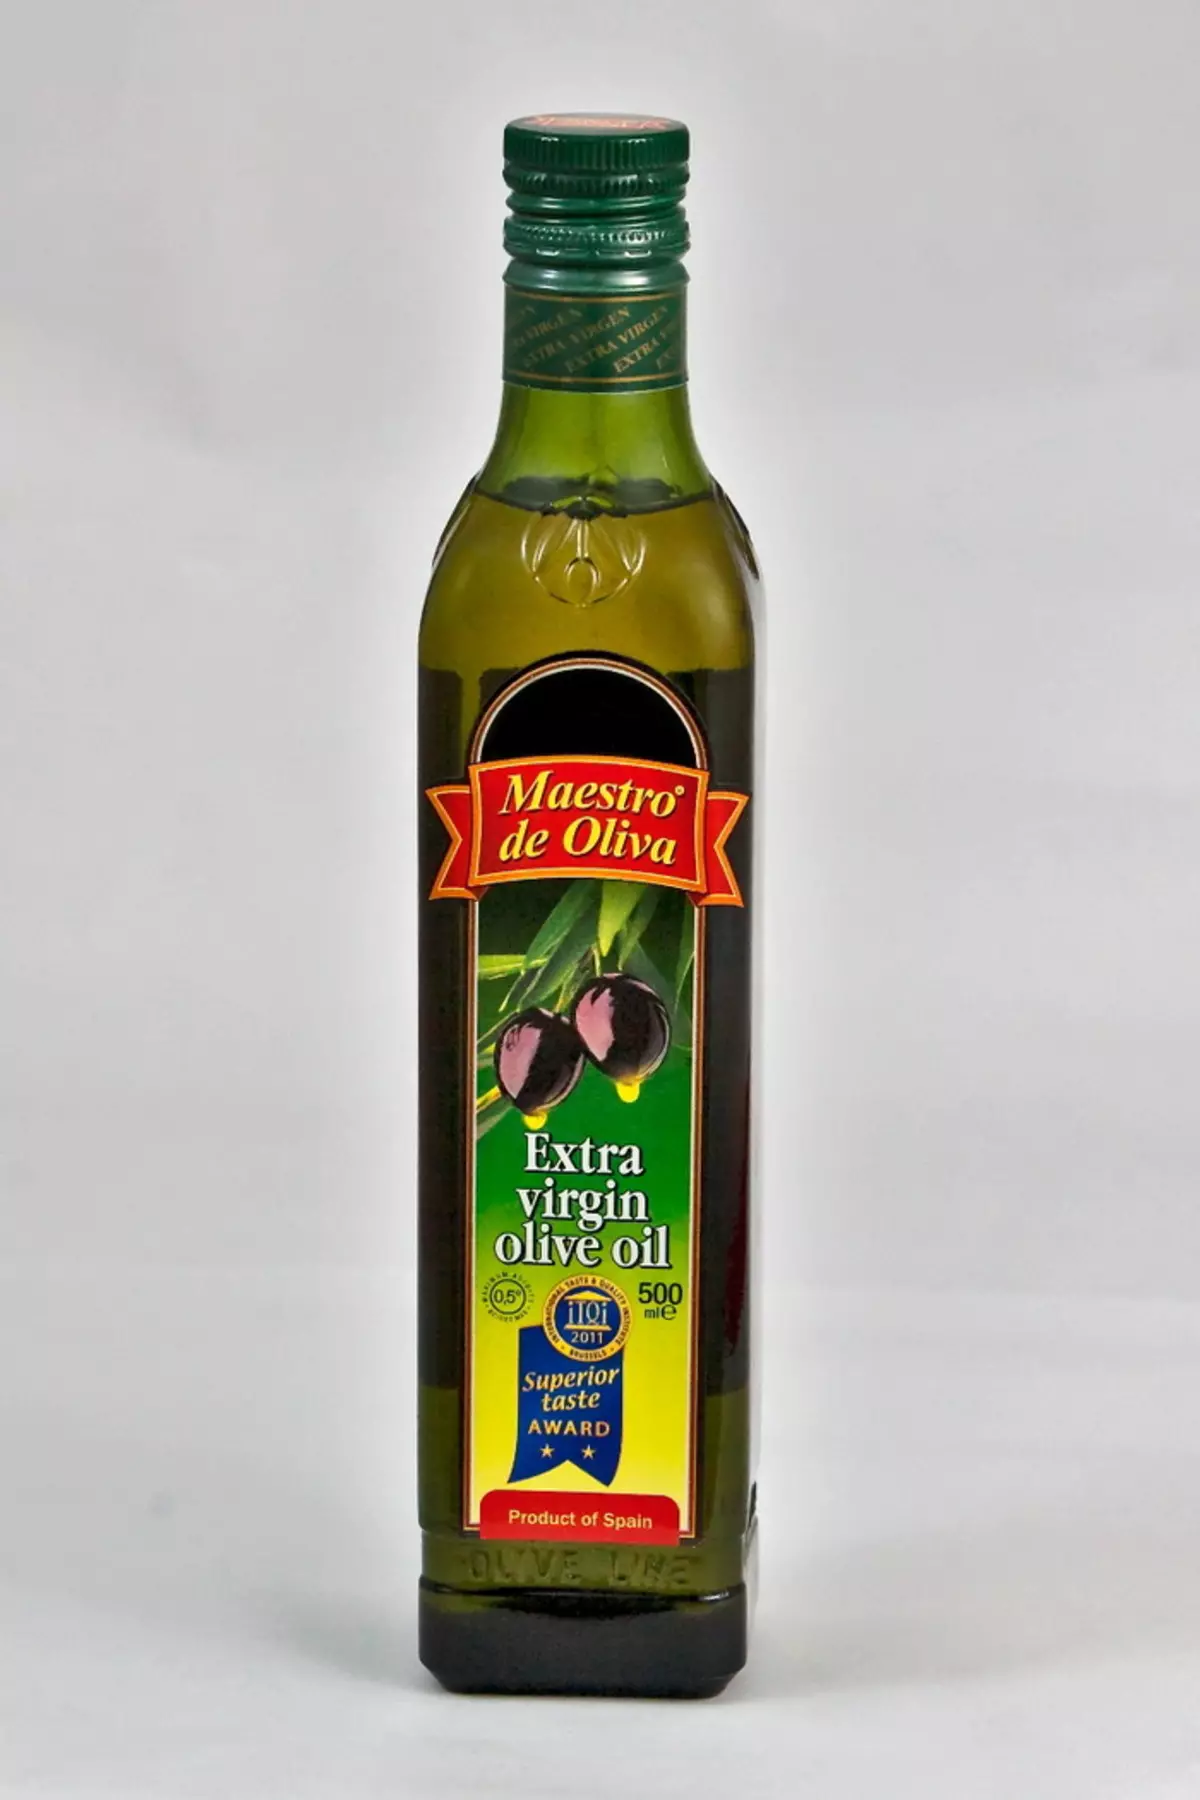 Оливковое масло для желудка